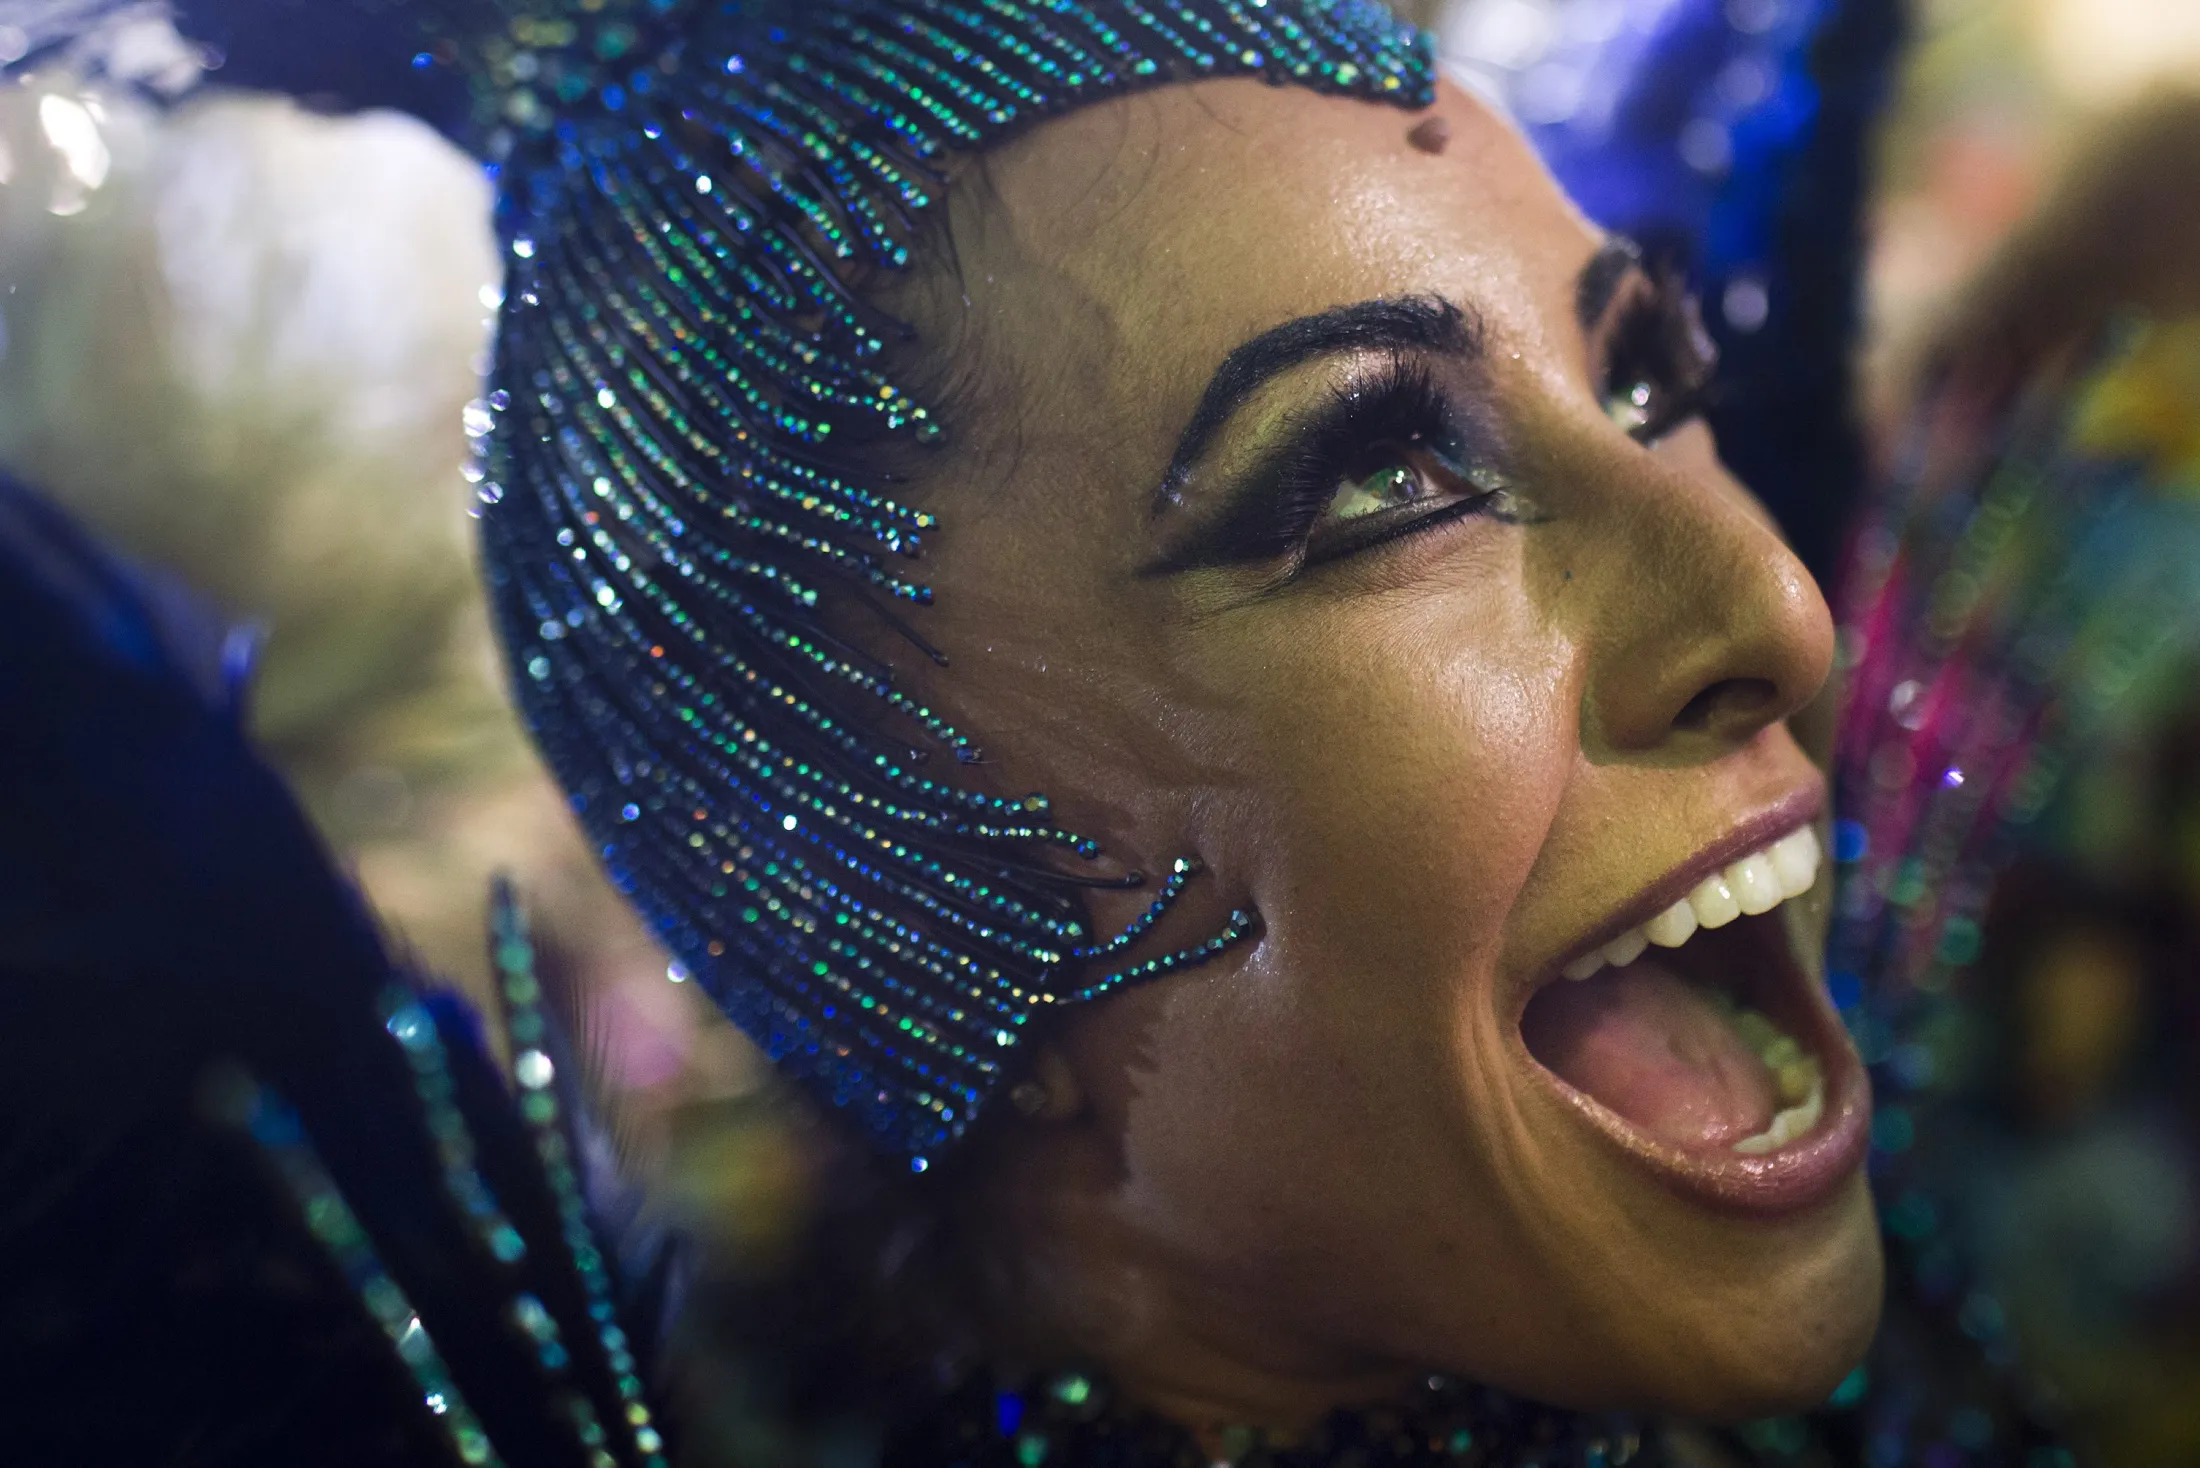 Carnival scenes. Sabrina Sato бразильский карнавал. Бразильский карнавал 2013. Карнавал певица фото. Карнавал певичка.